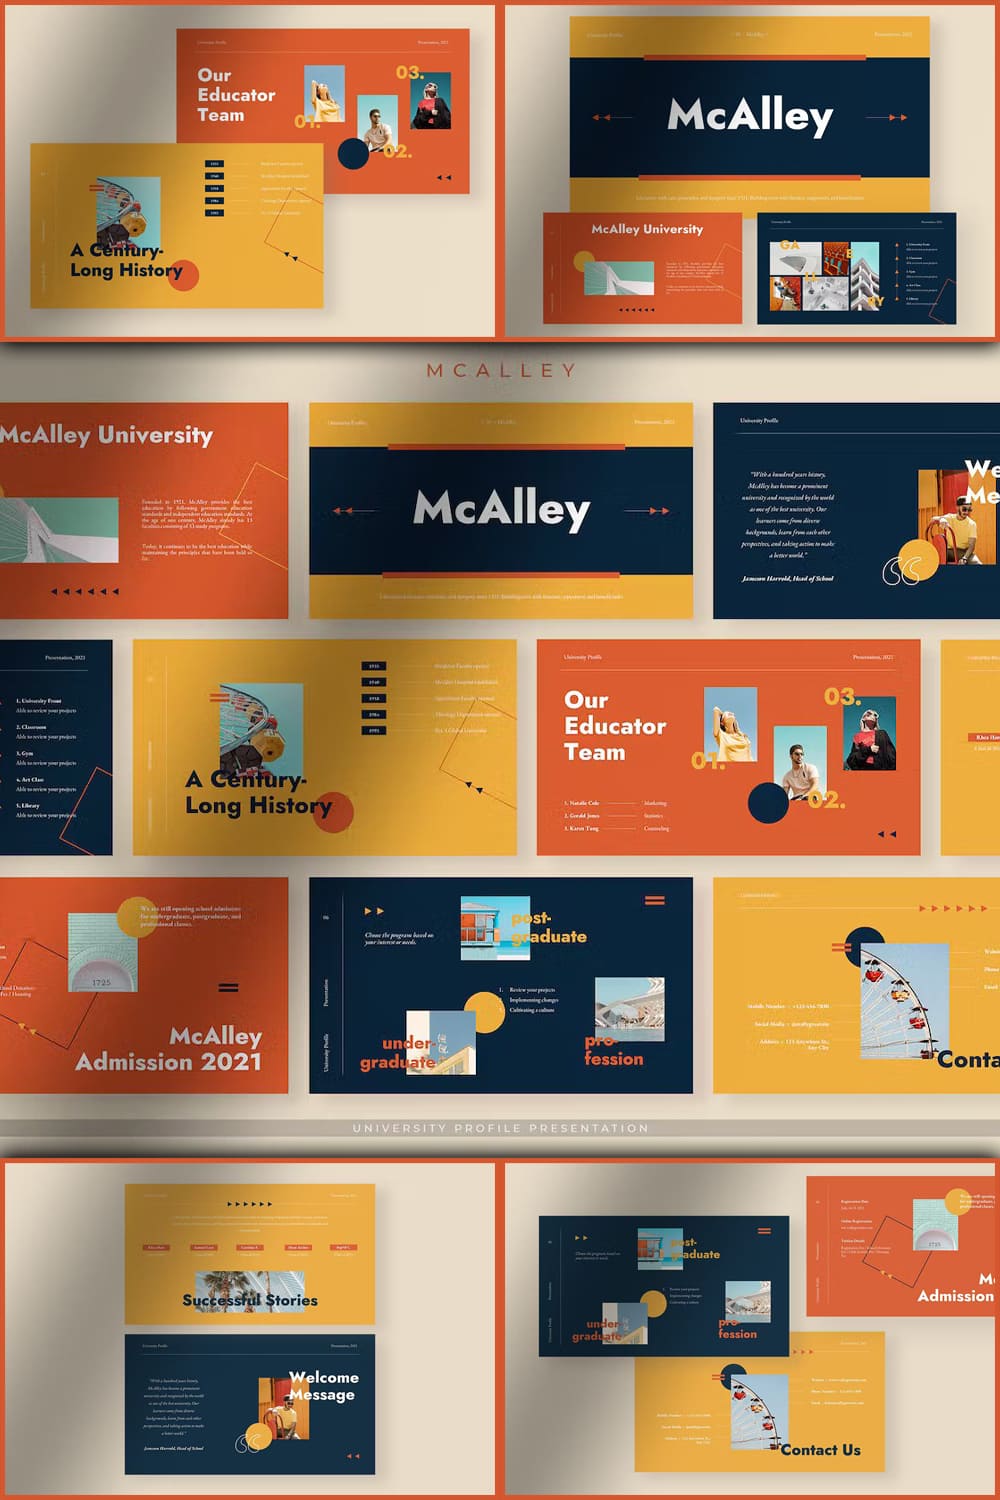 Mcalley - Creative University Profile Presentation - Pinterest.